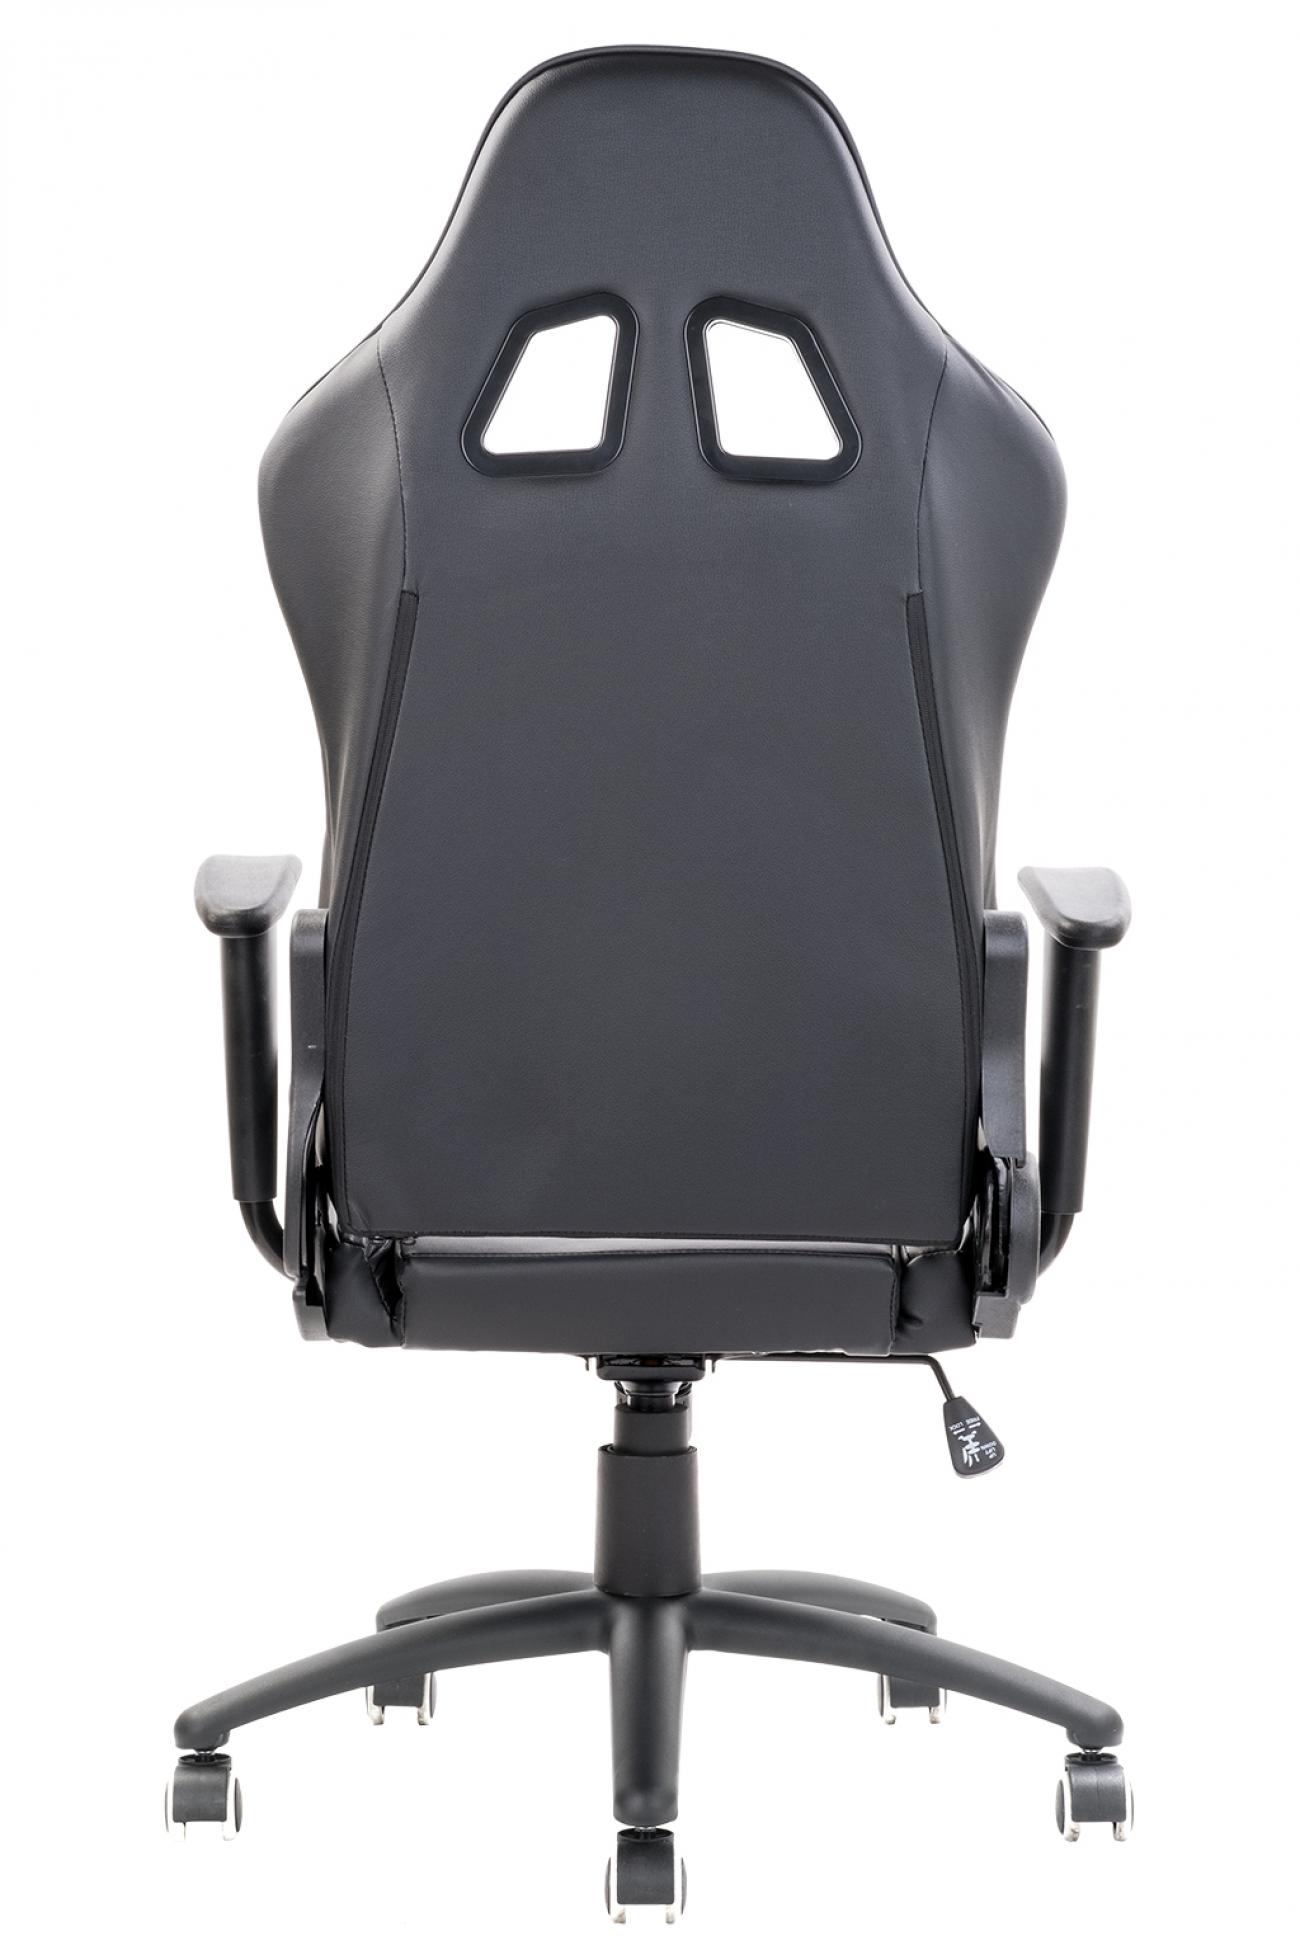 itek Gaming Chair PLAYCOM PM20 - PVC, Doppio Cuscino, Schienale Reclinabile, Nero Nero